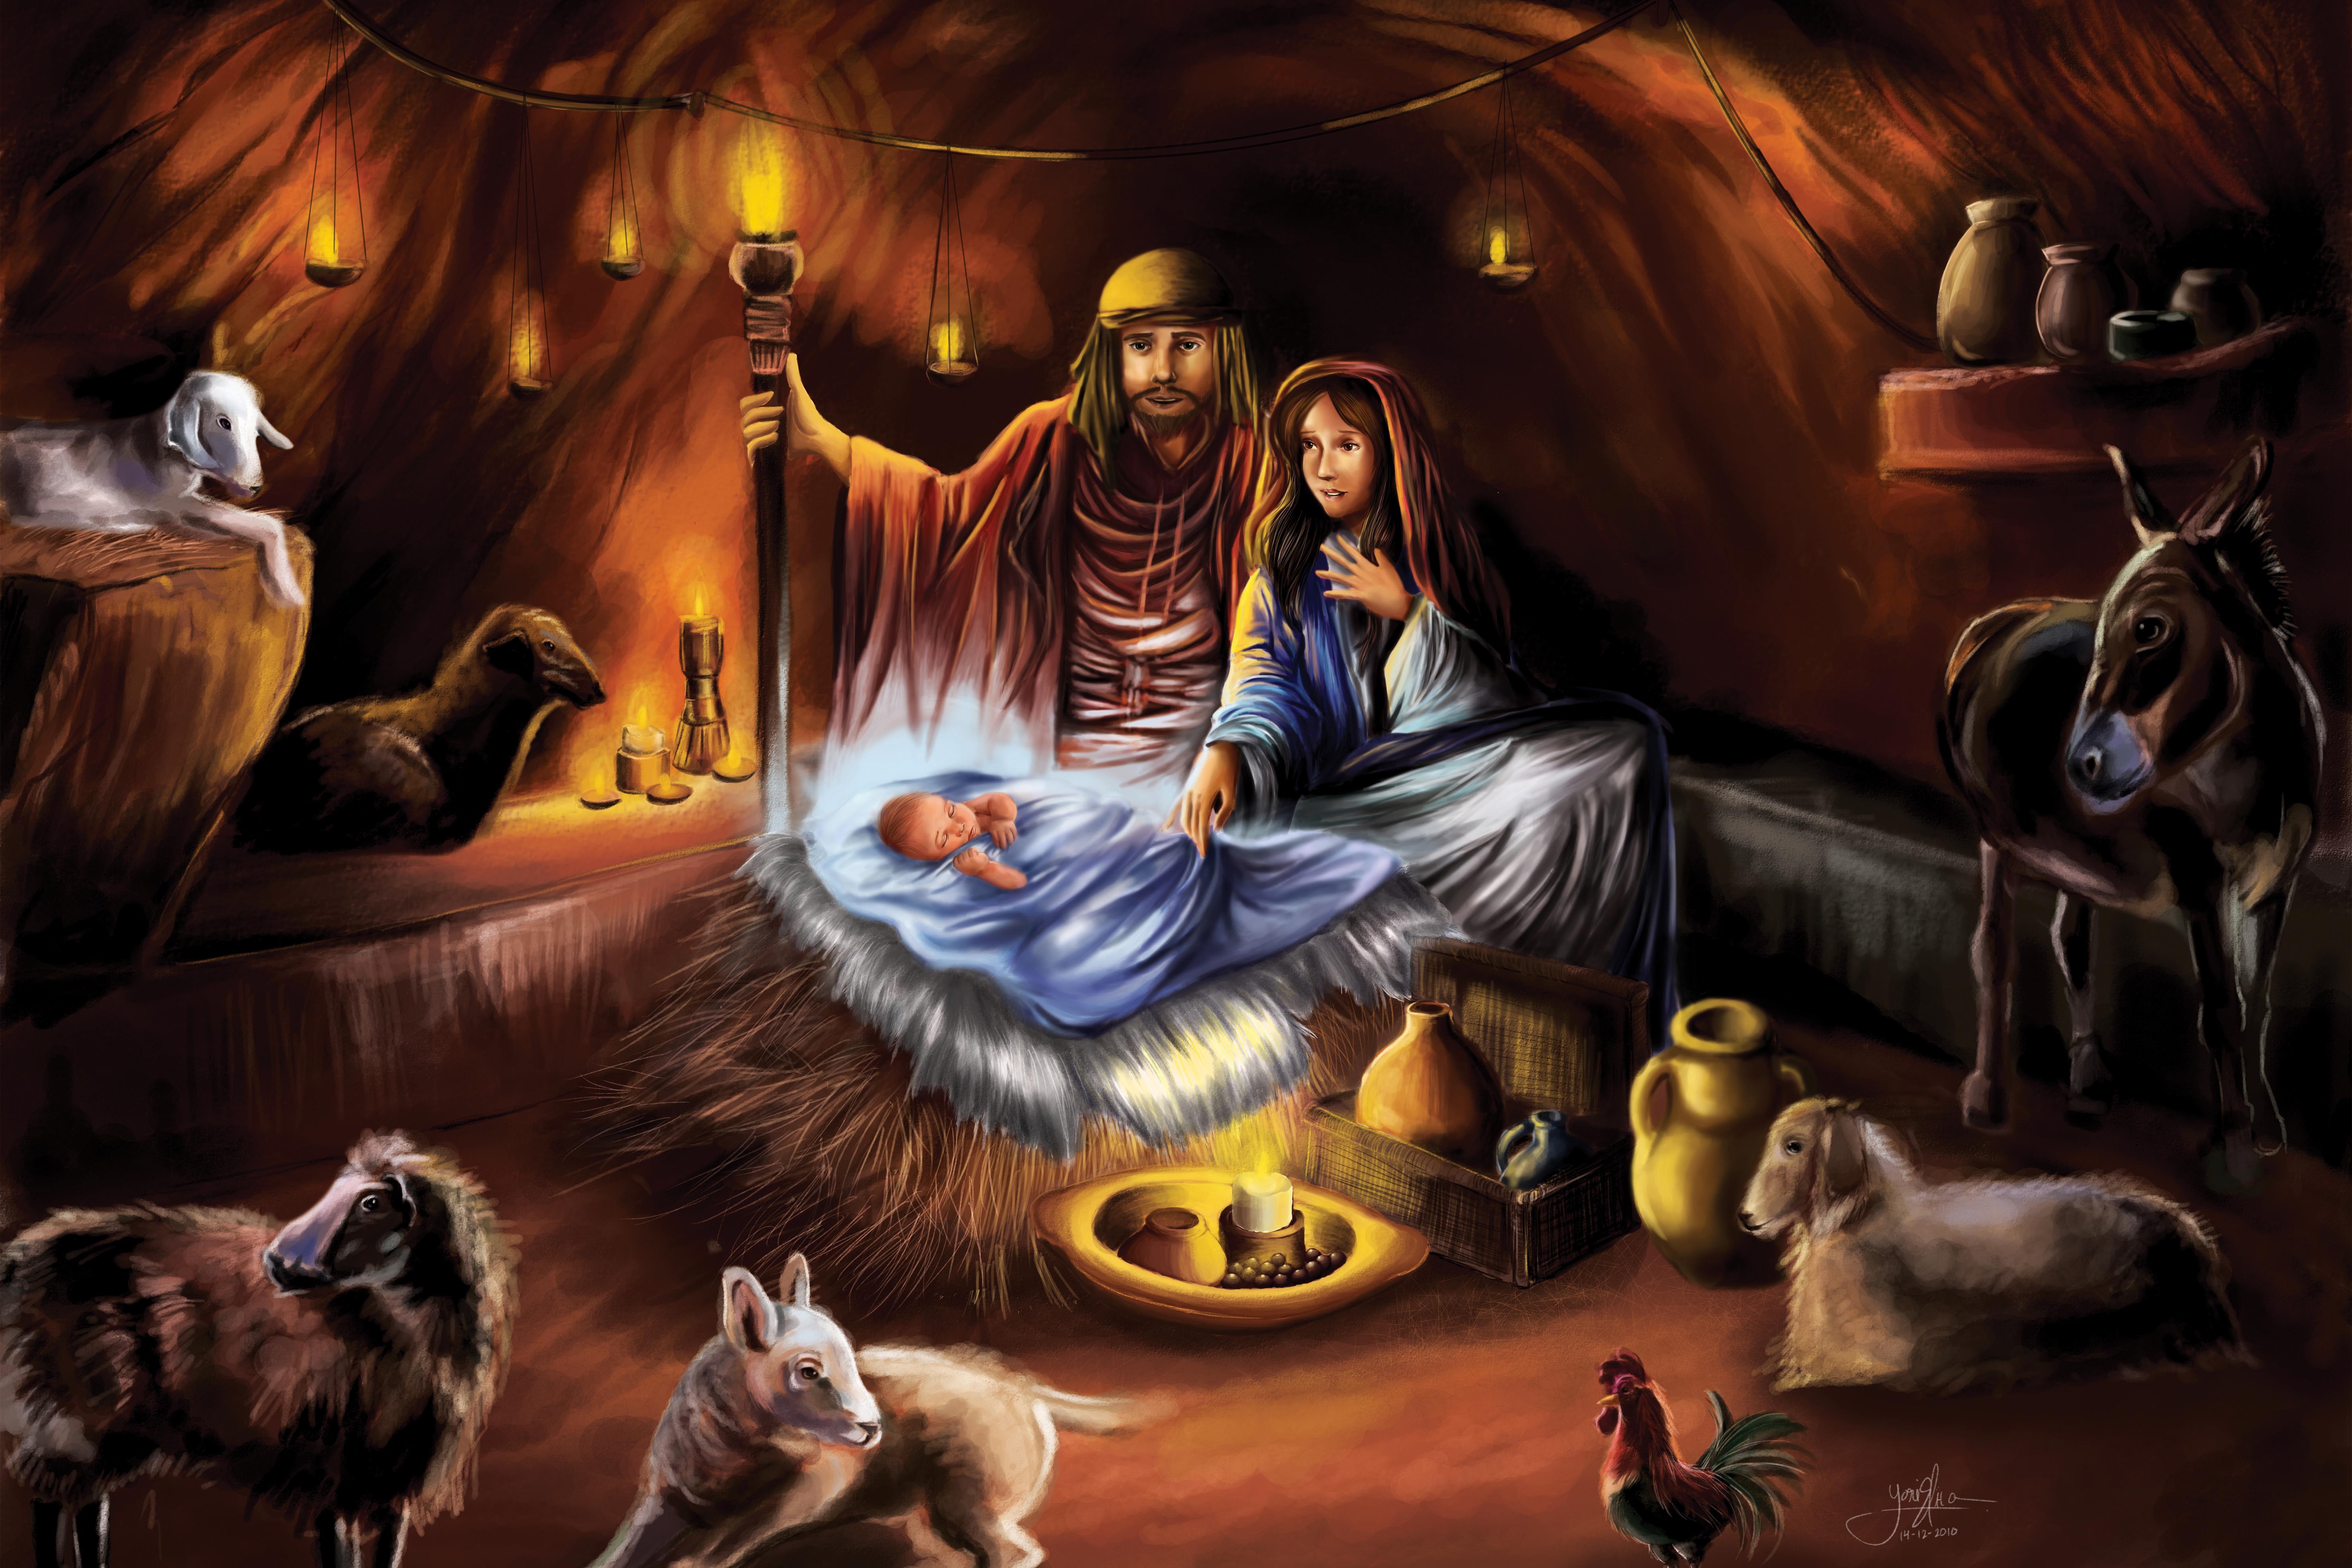 Birth of Christ Wallpaper. Birth of Christ Wallpaper, Kingdom Hearts Birth by Sleep Wallpaper and Green Lantern Rebirth Wallpaper